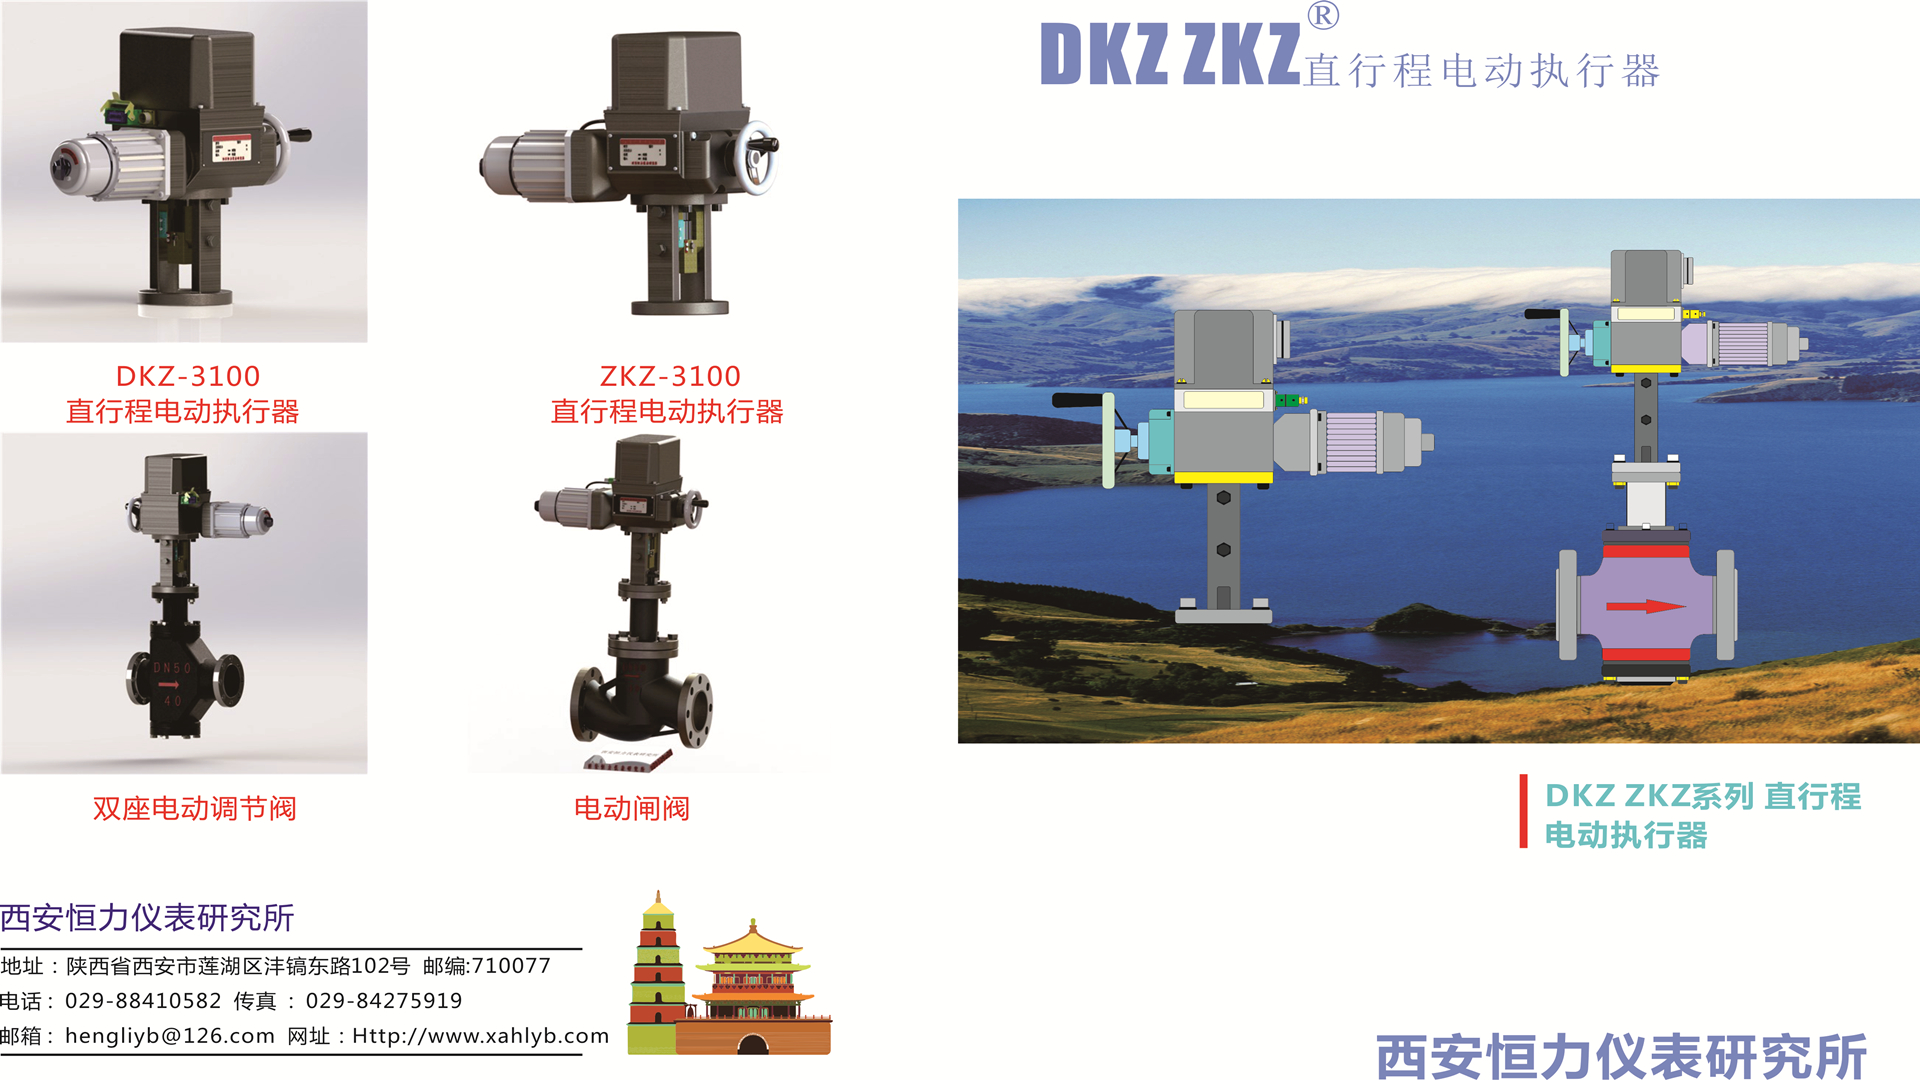 DKZ ZKZ直行程电动执行器说明书1